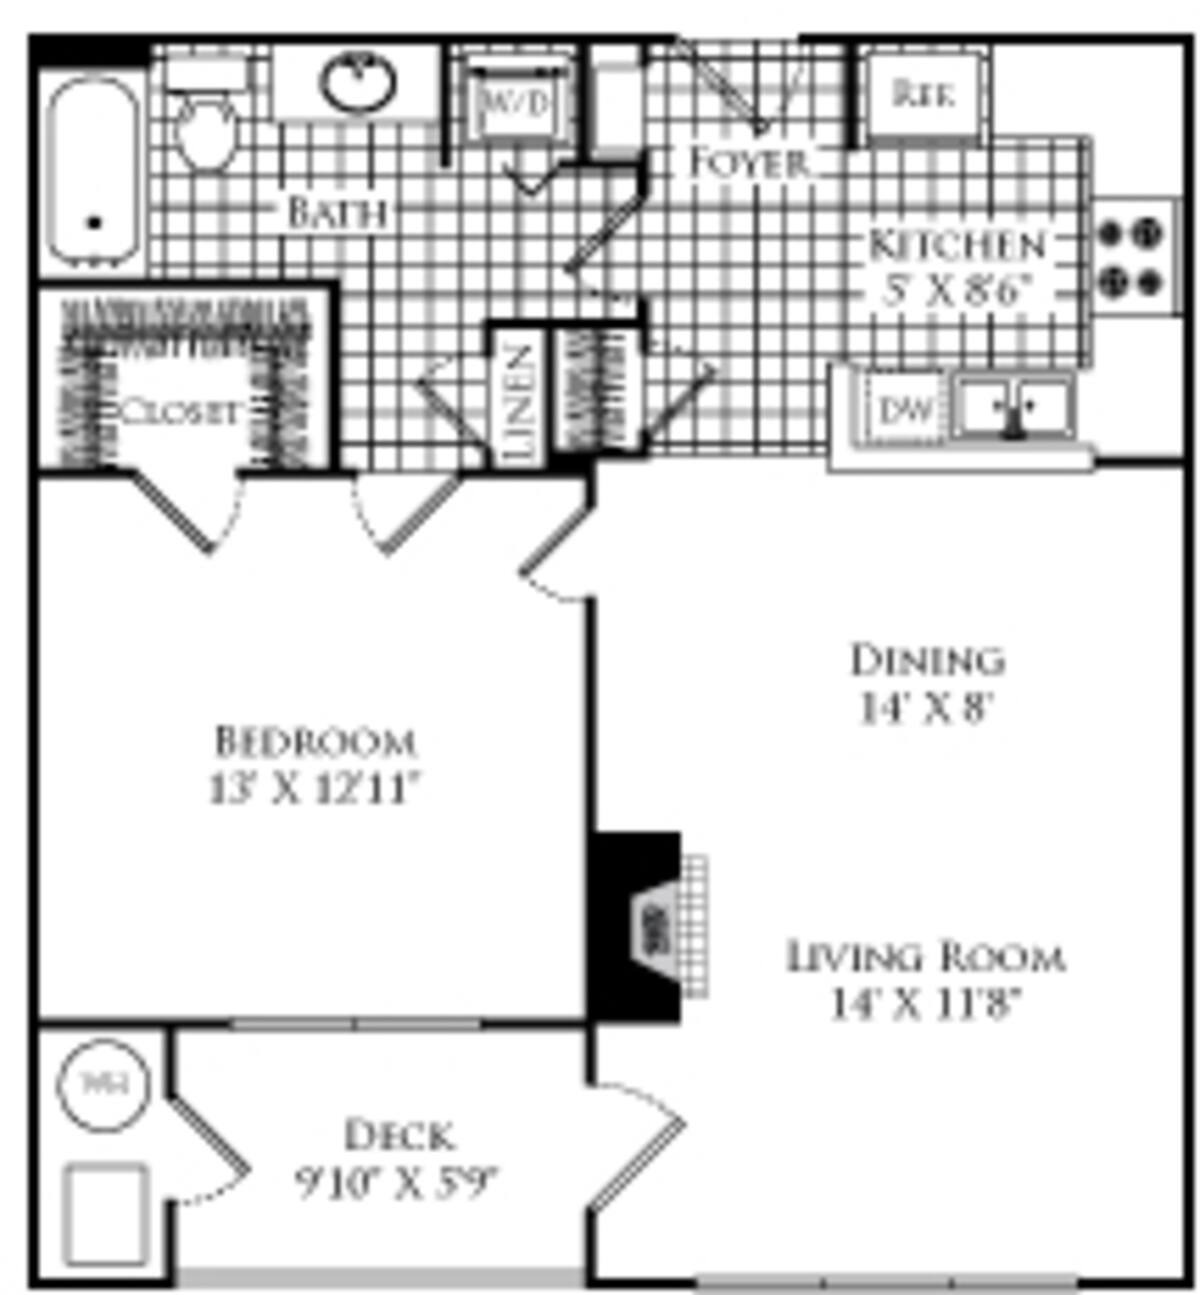 Floorplan diagram for Chestnut, showing 1 bedroom